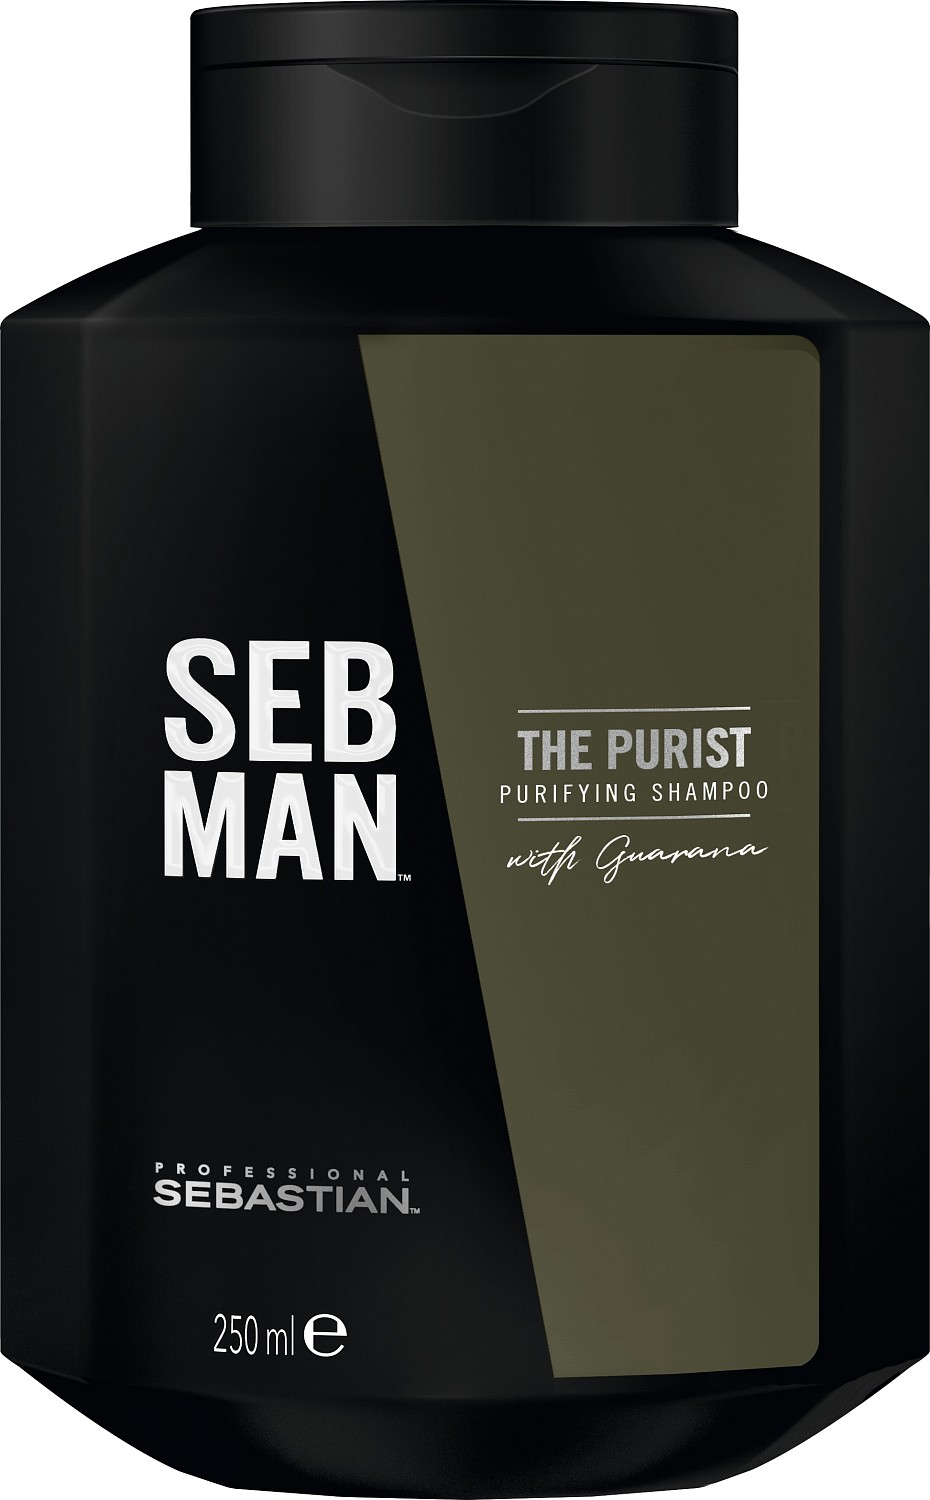  Seb Man The Purist Shampoo 